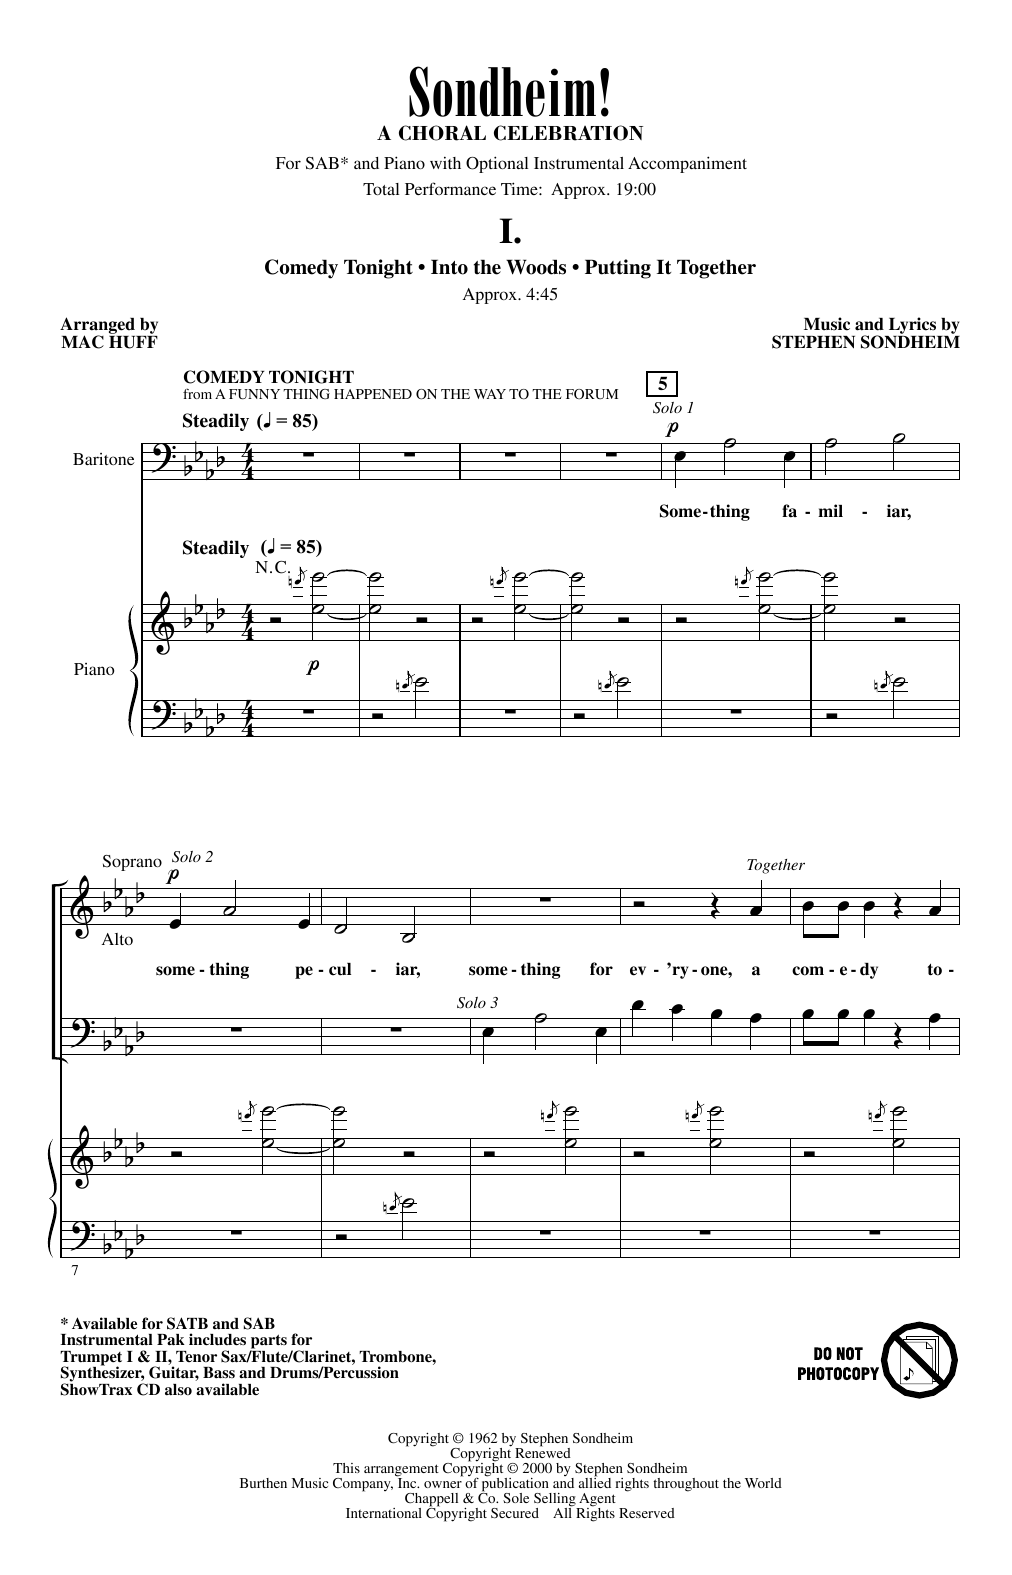 Stephen Sondheim Sondheim! A Choral Celebration (Medley) (arr. Mac Huff) Sheet Music Notes & Chords for SAB Choir - Download or Print PDF